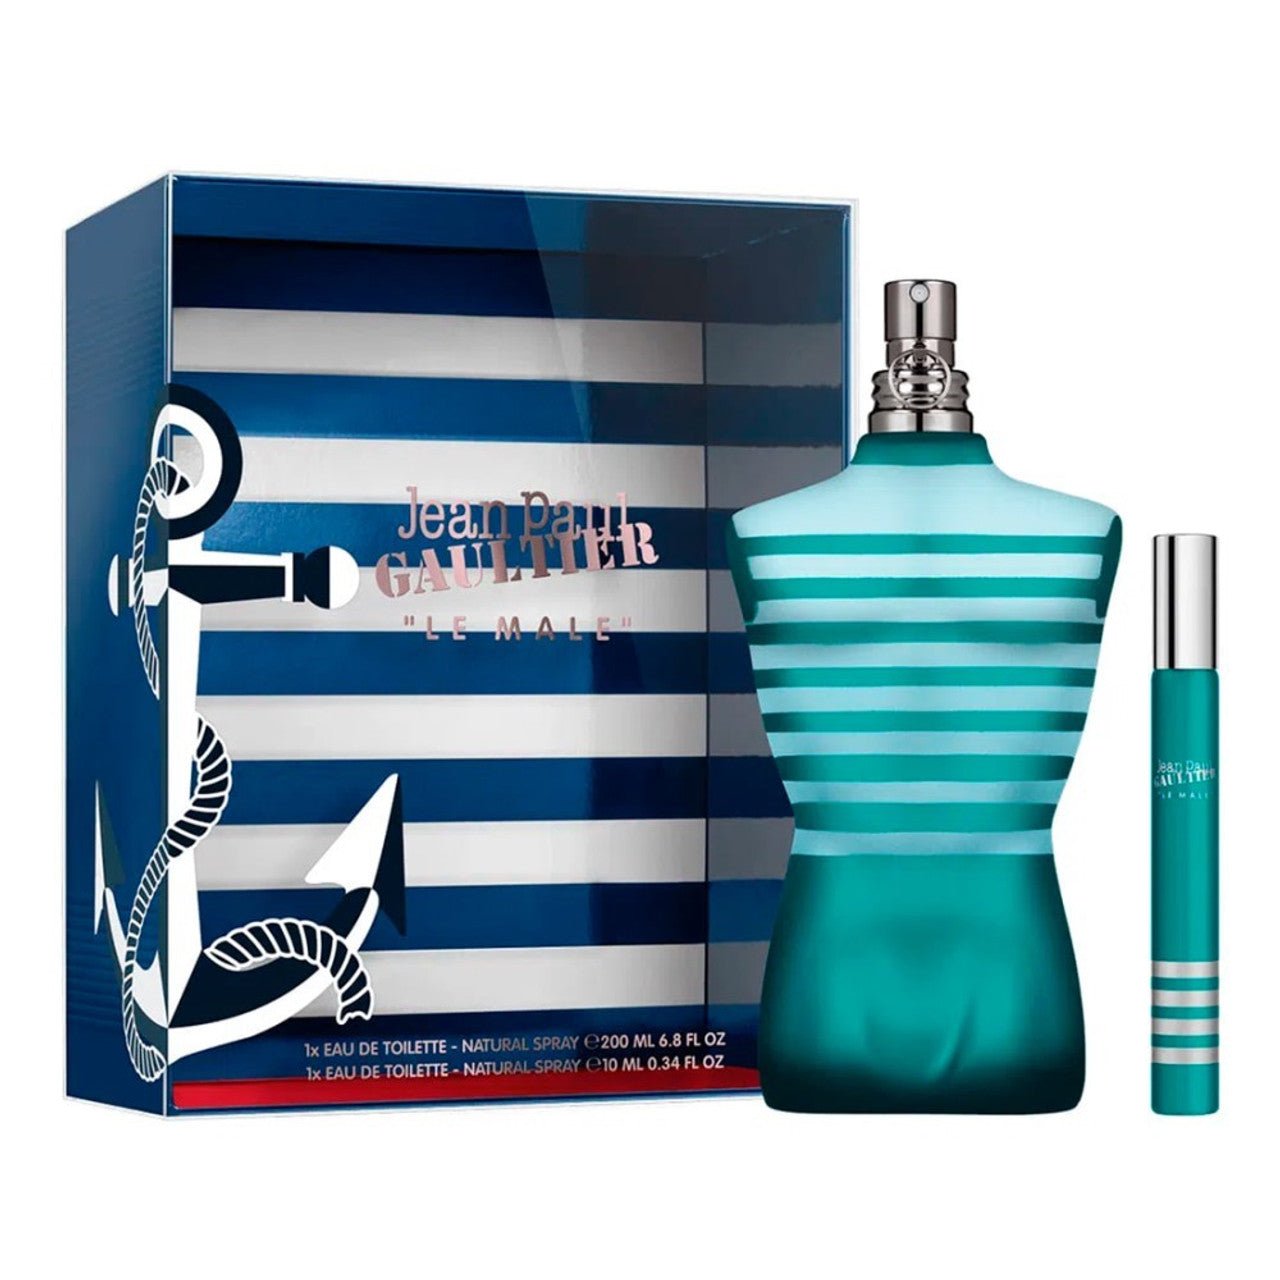 Jean Paul Gaultier "Le Male" EDT Navy Travel Set | My Perfume Shop Australia